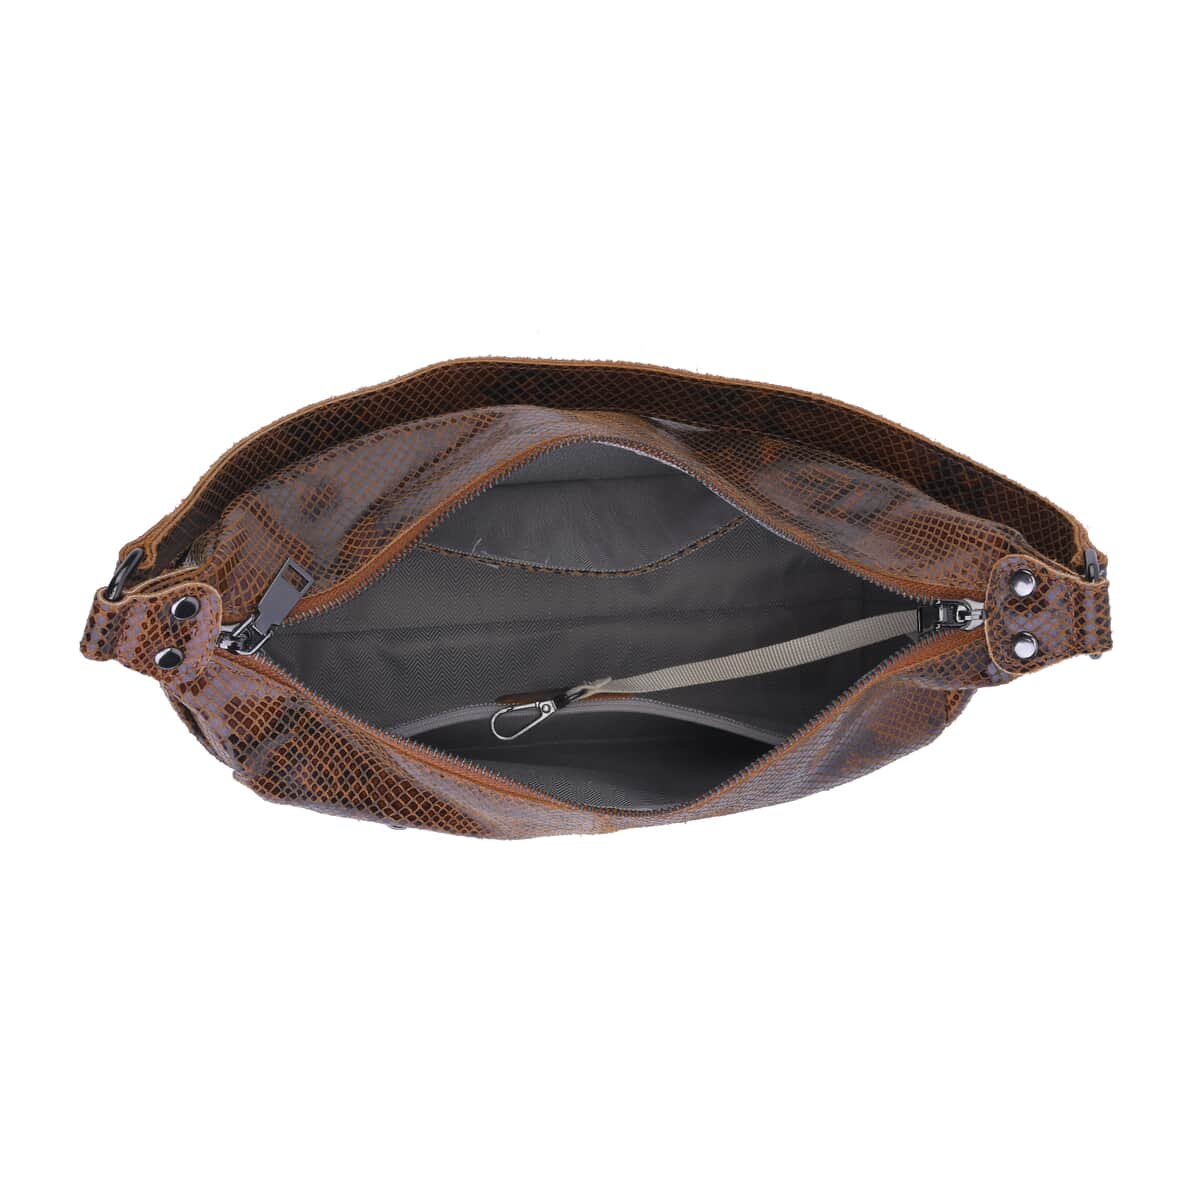 Tan and Black Python Embossed Print Genuine Leather Hobo Bag with Shoulder Straps image number 5